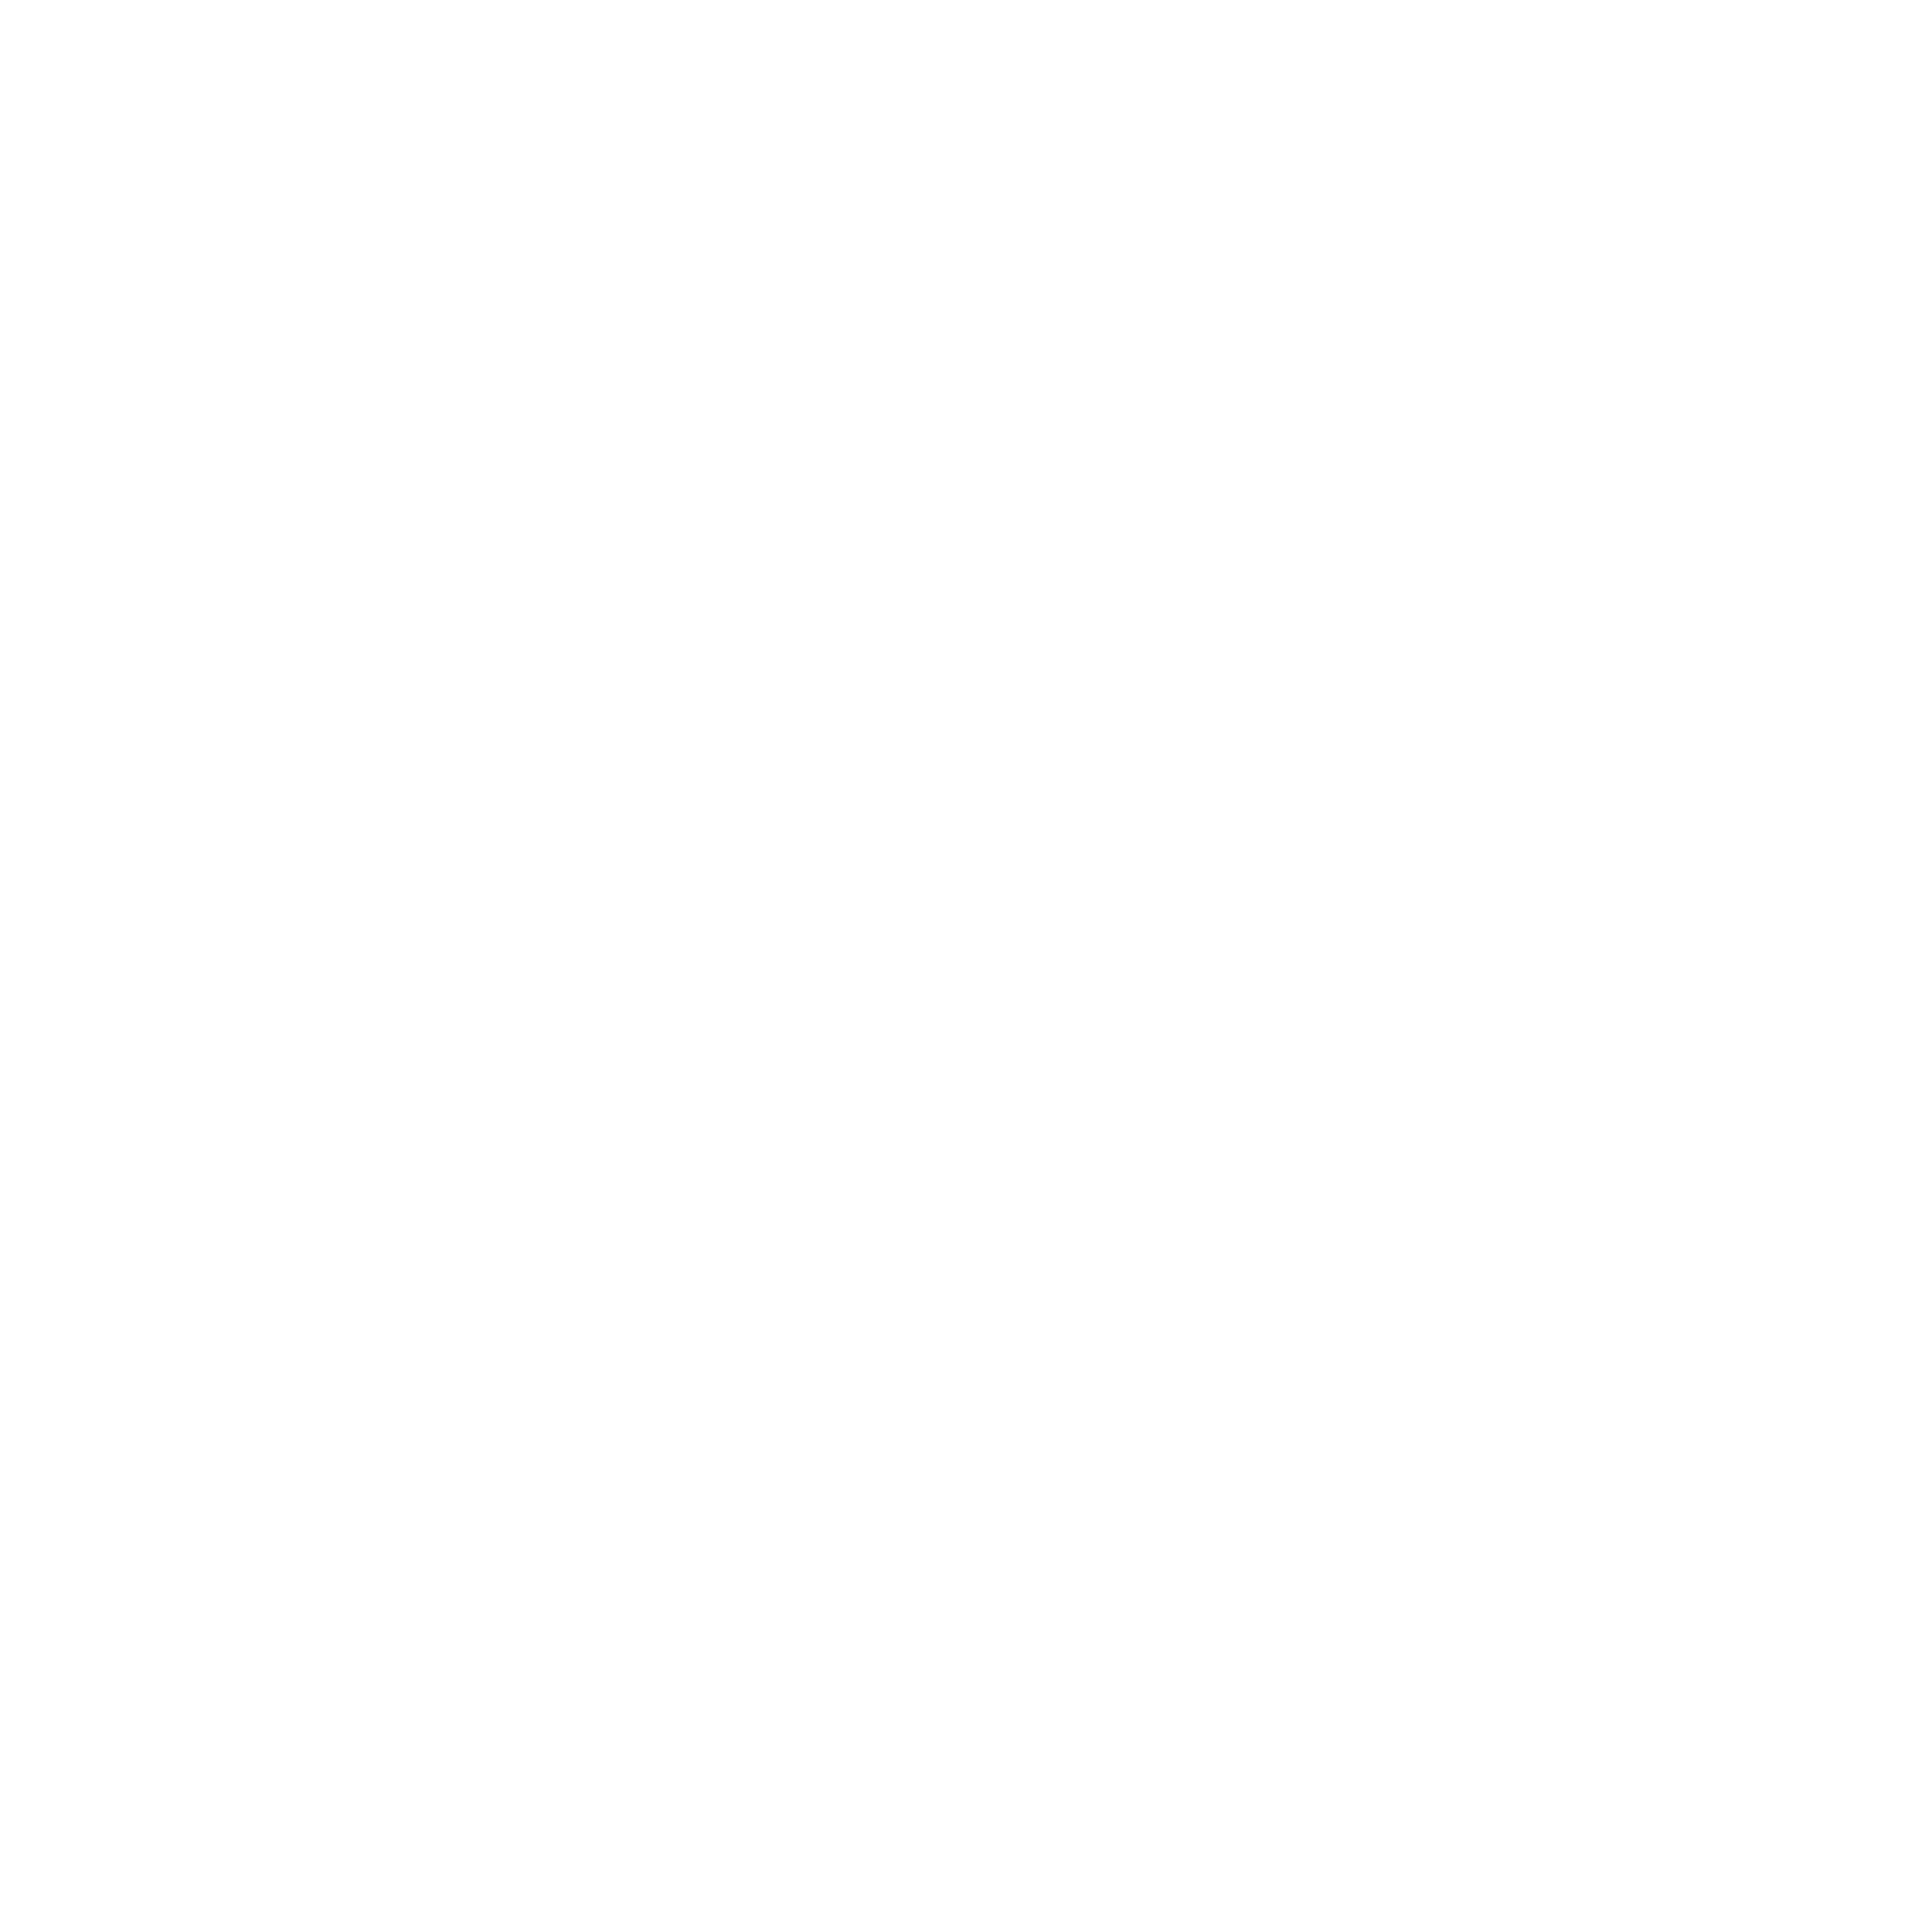 COFFEE STRIKES